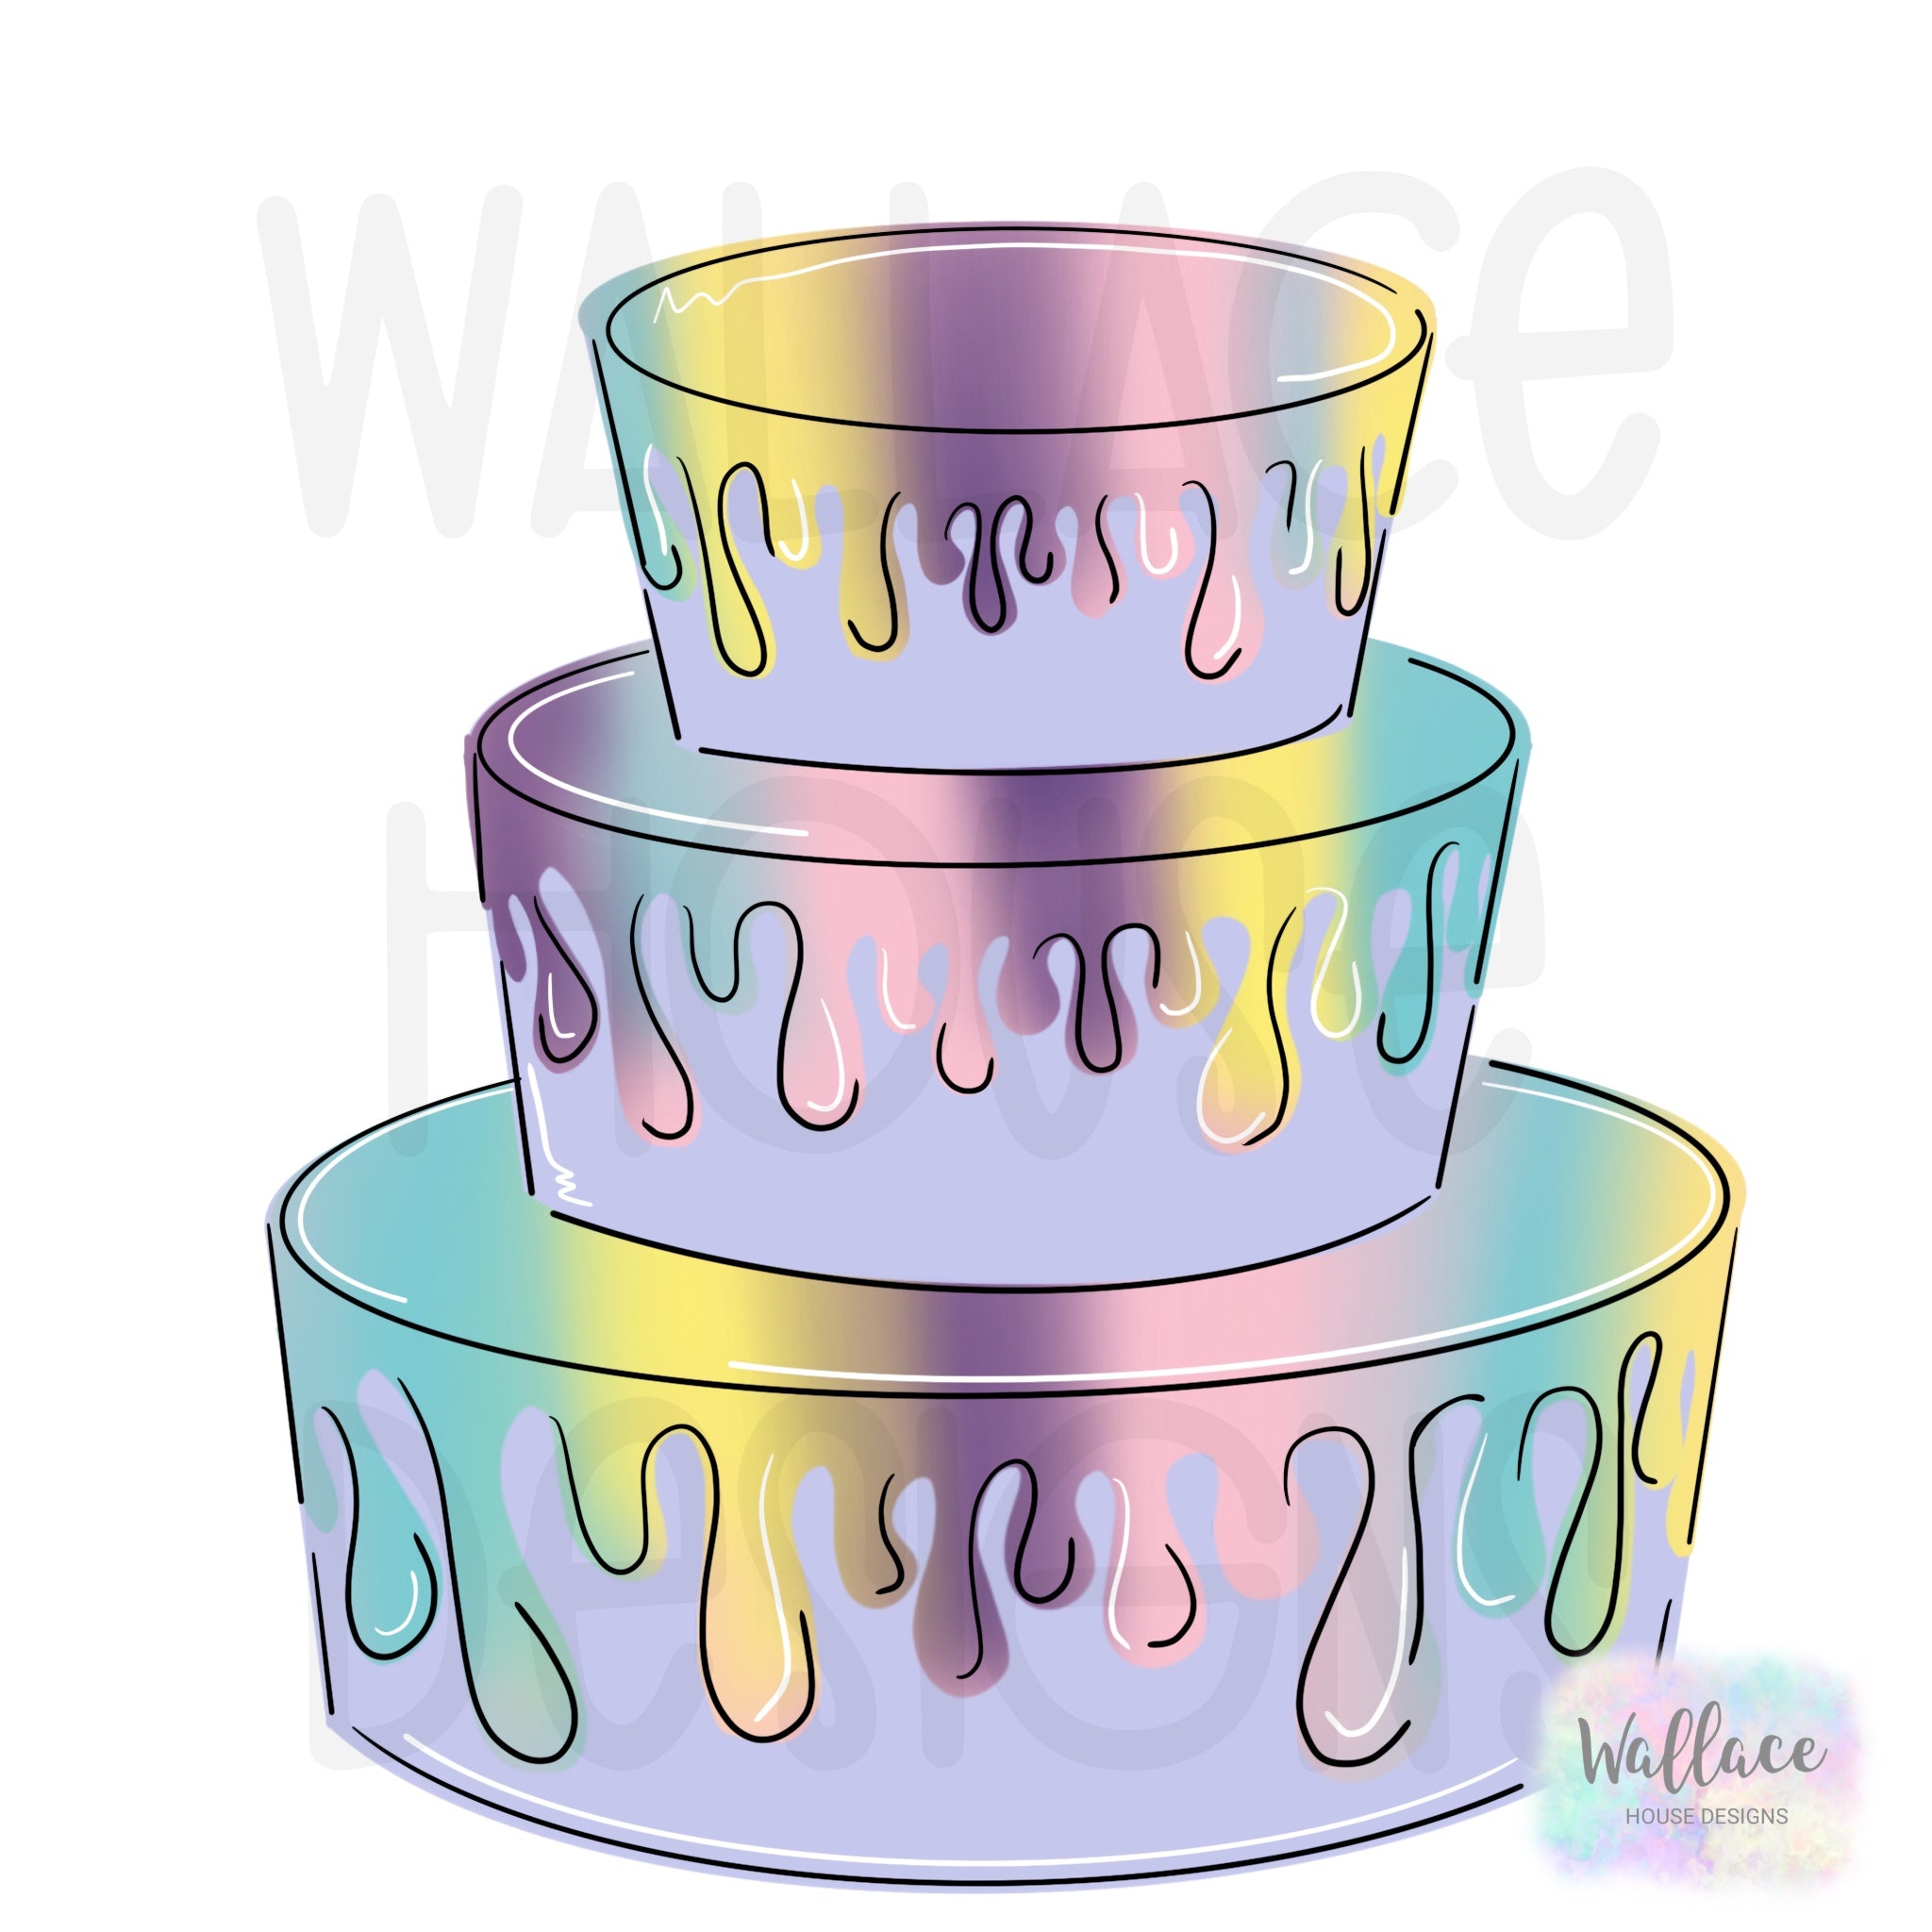 Free cake vector - Vector Art